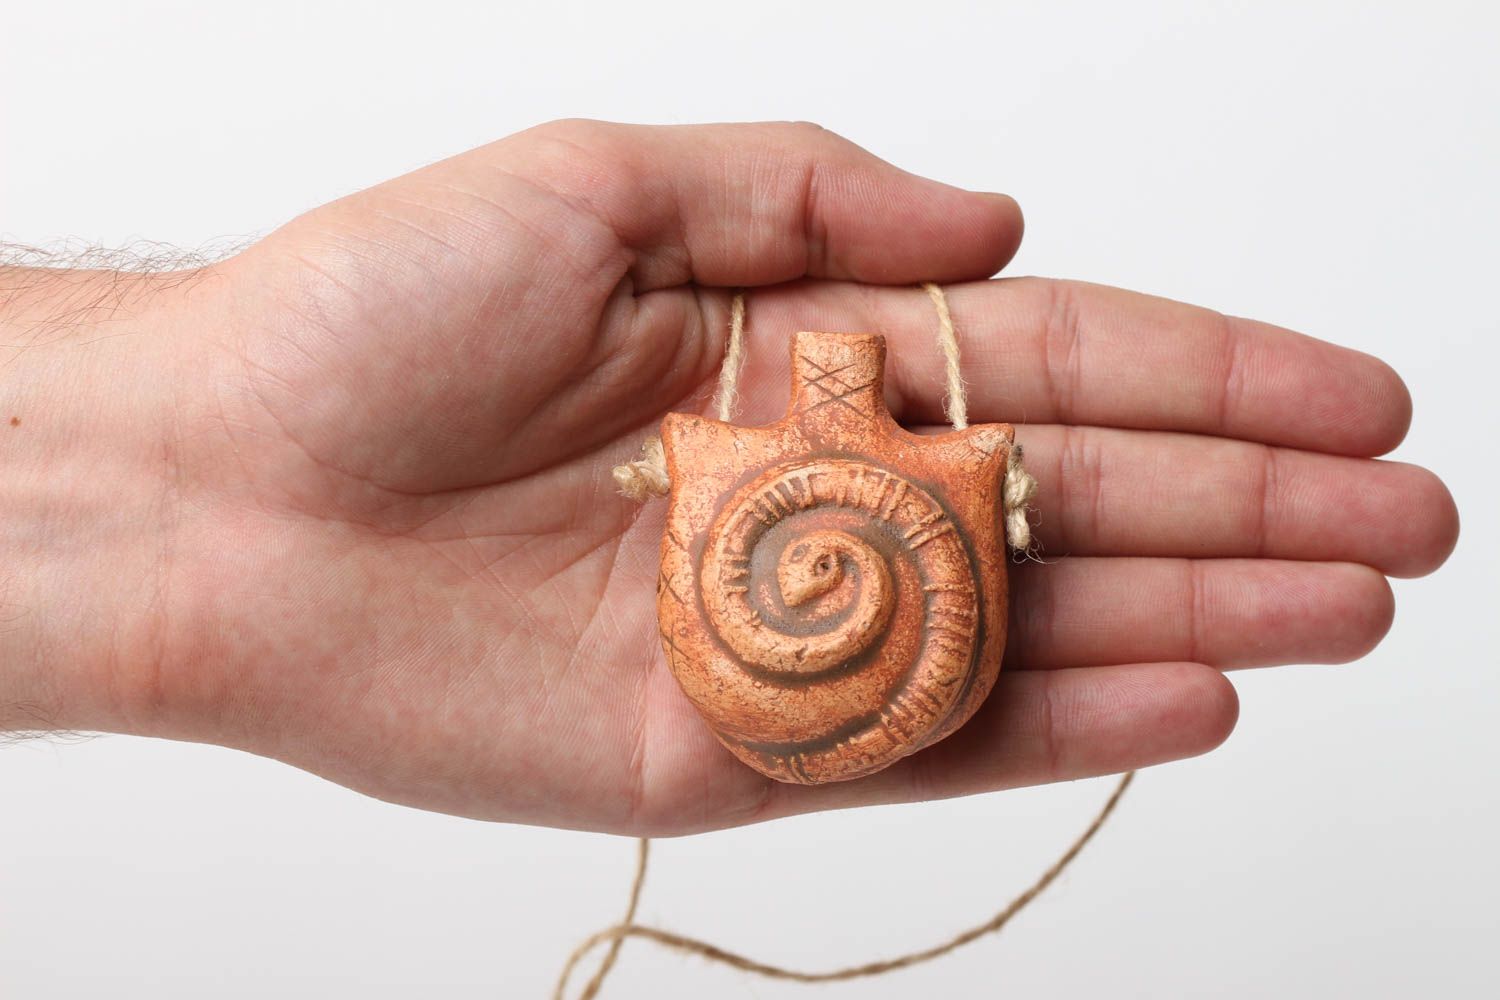 Handmade pendant clay pendant for women gift ideas unusual accessories photo 5